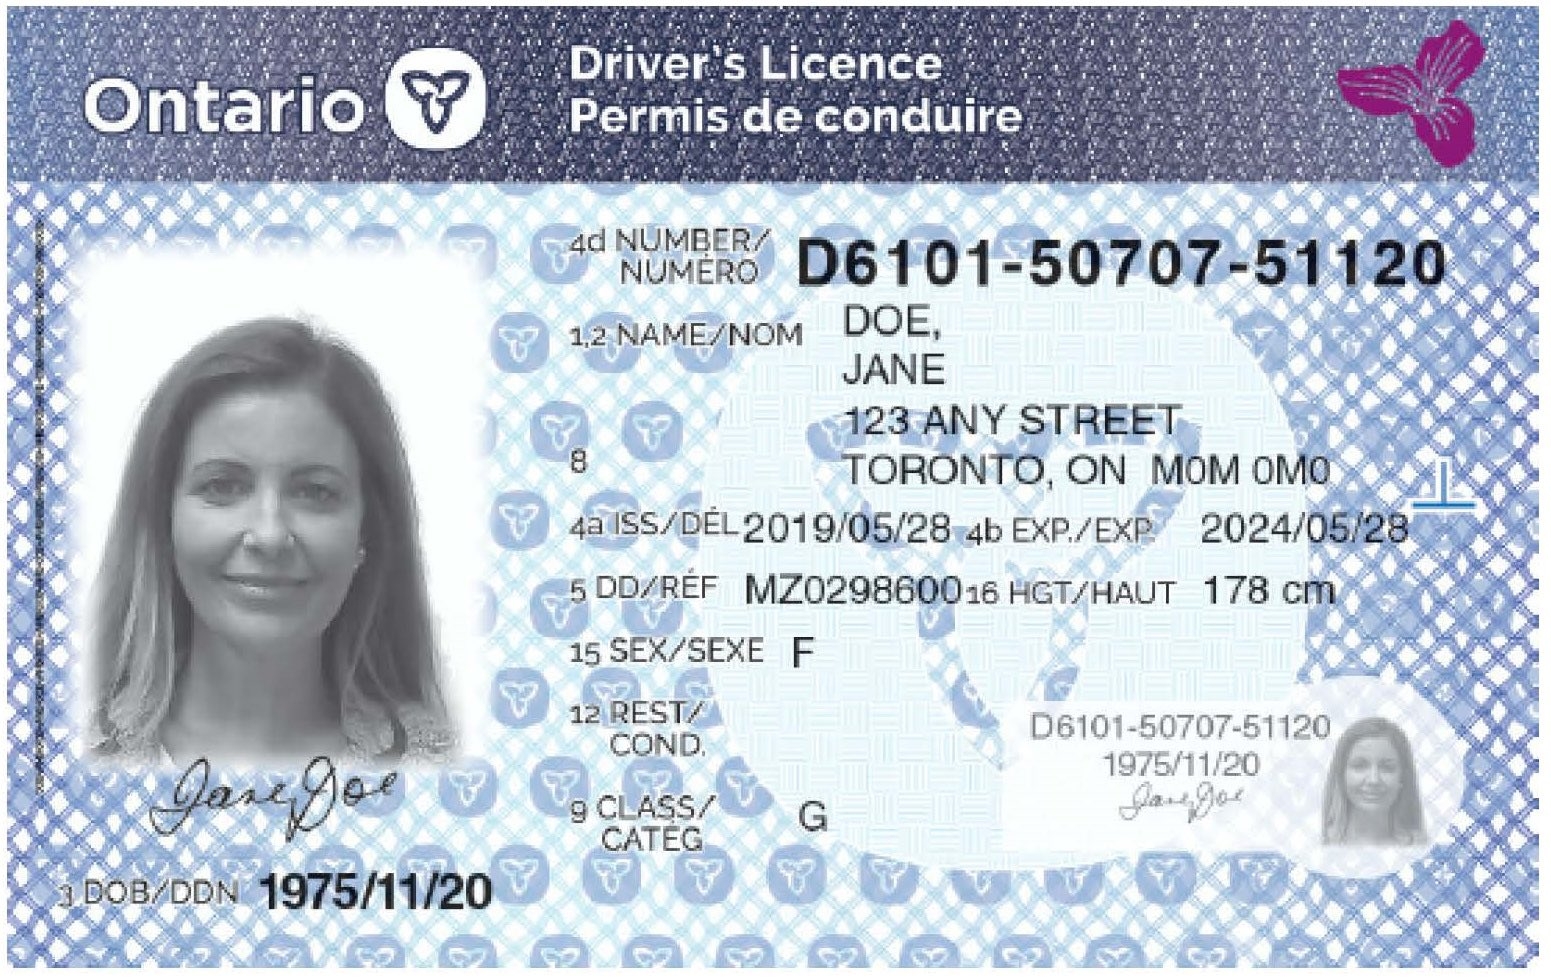 ontario-extends-driver-s-licence-ohip-card-renewals-toronto-sun